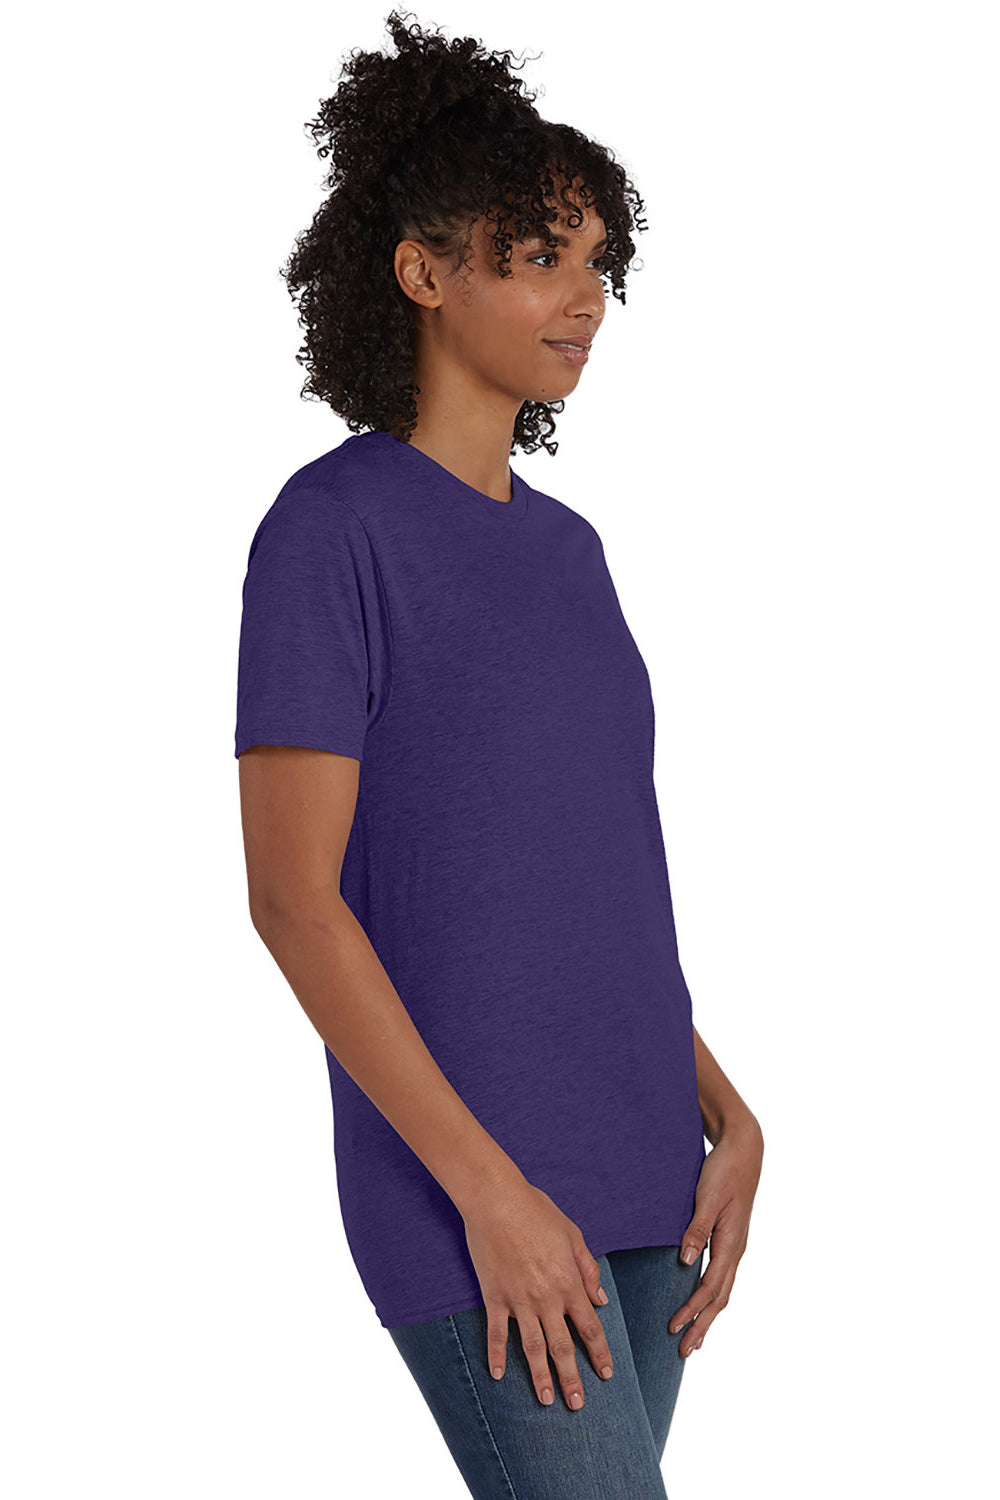 Hanes 4980 Mens Nano-T Short Sleeve Crewneck T-Shirt Heather Grape Smash Purple 3Q